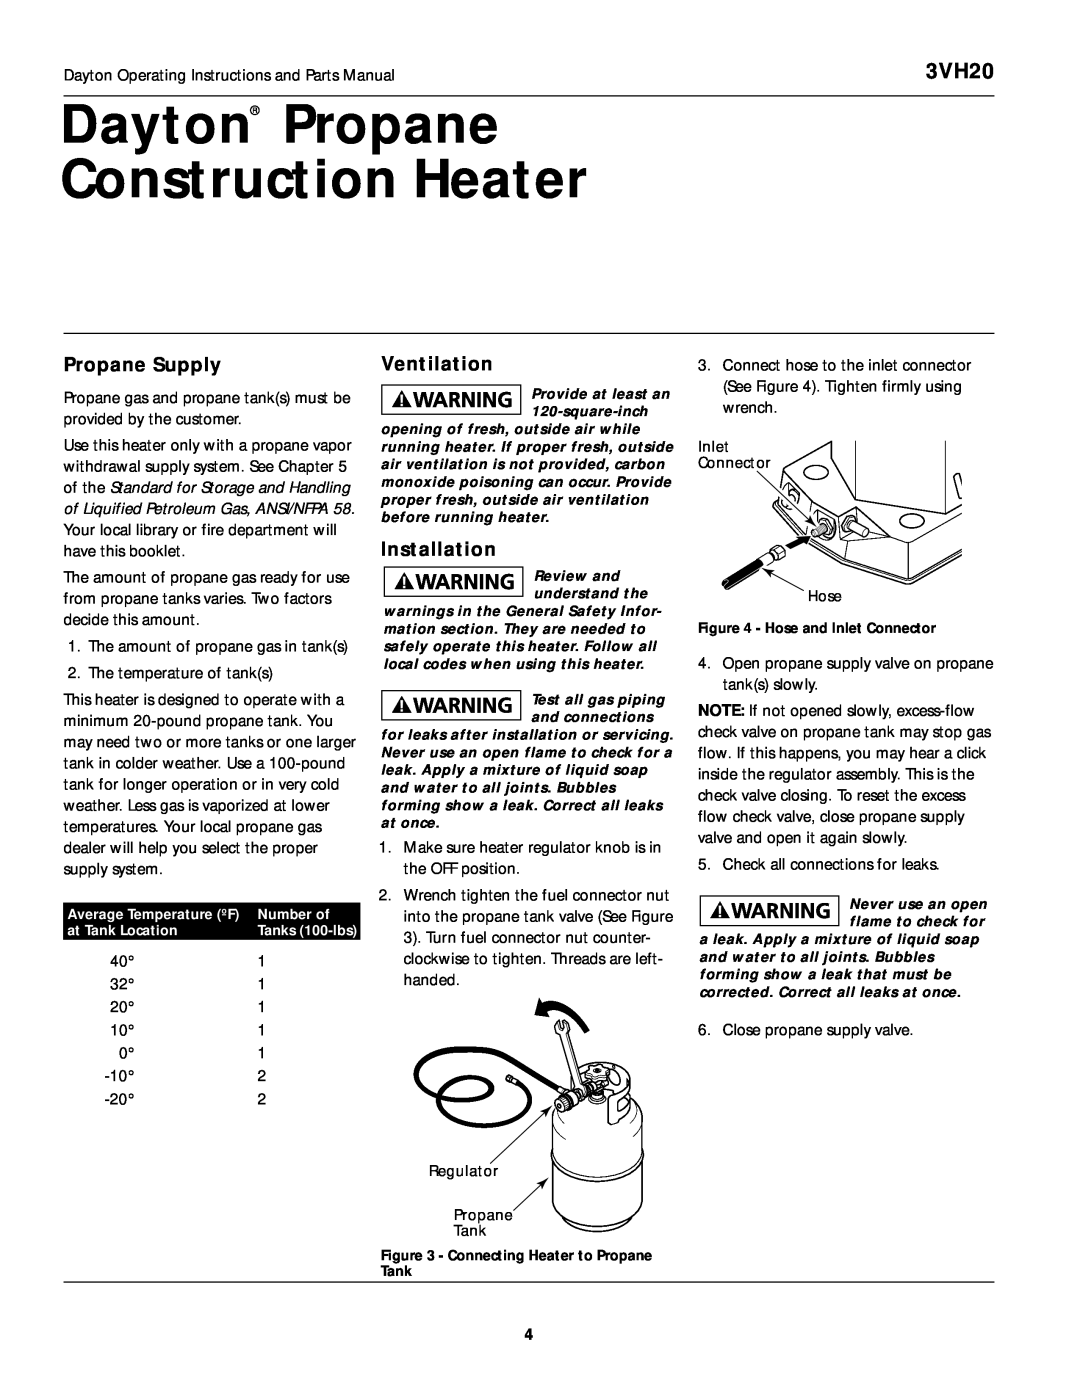 Dayton 3VH20 operating instructions Dayton Propane Construction Heater, Propane Supply, Ventilation, Installation 